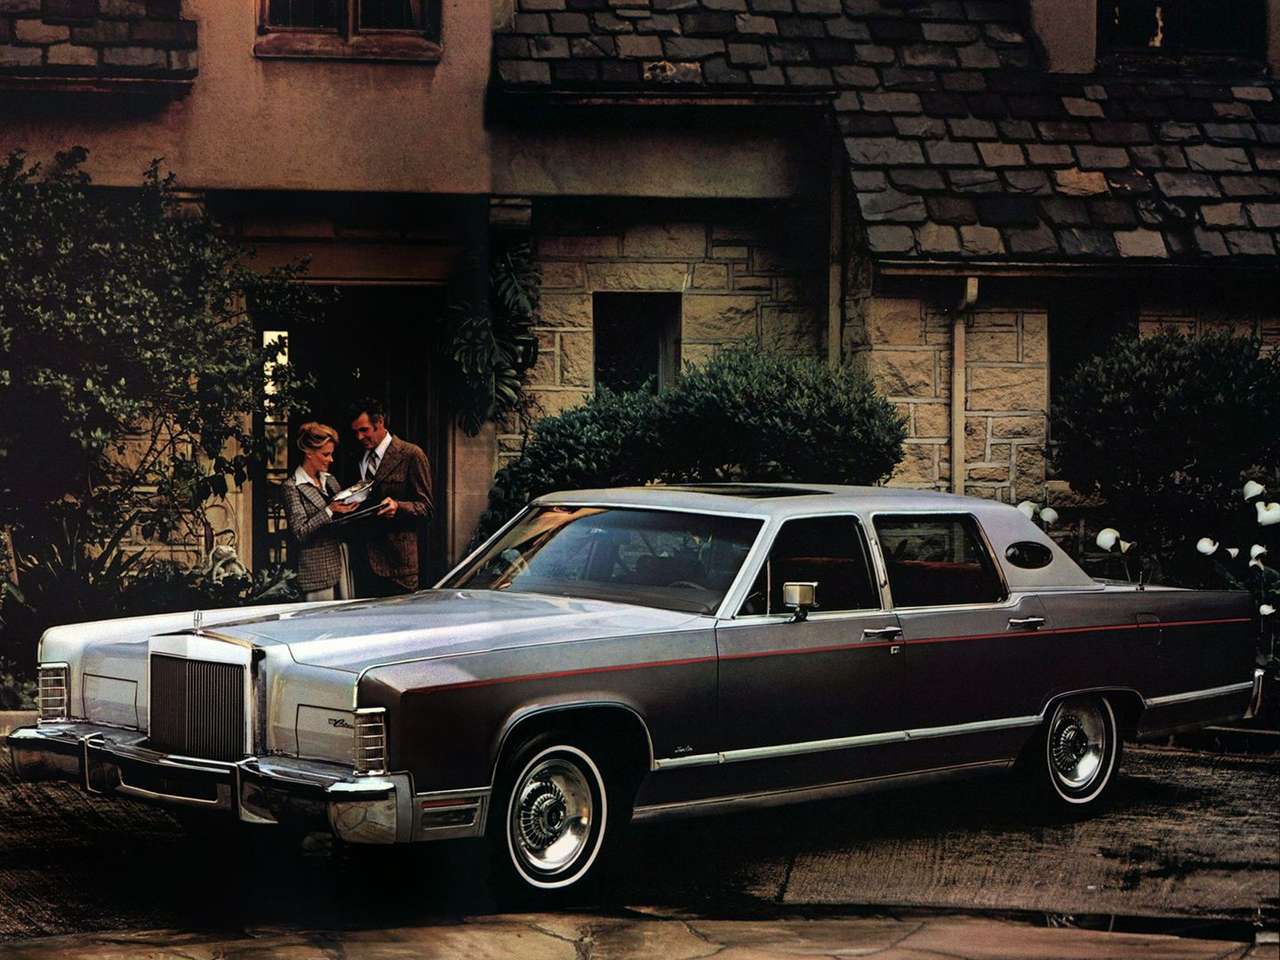 1978 Lincoln Continental miejski samochód. puzzle online